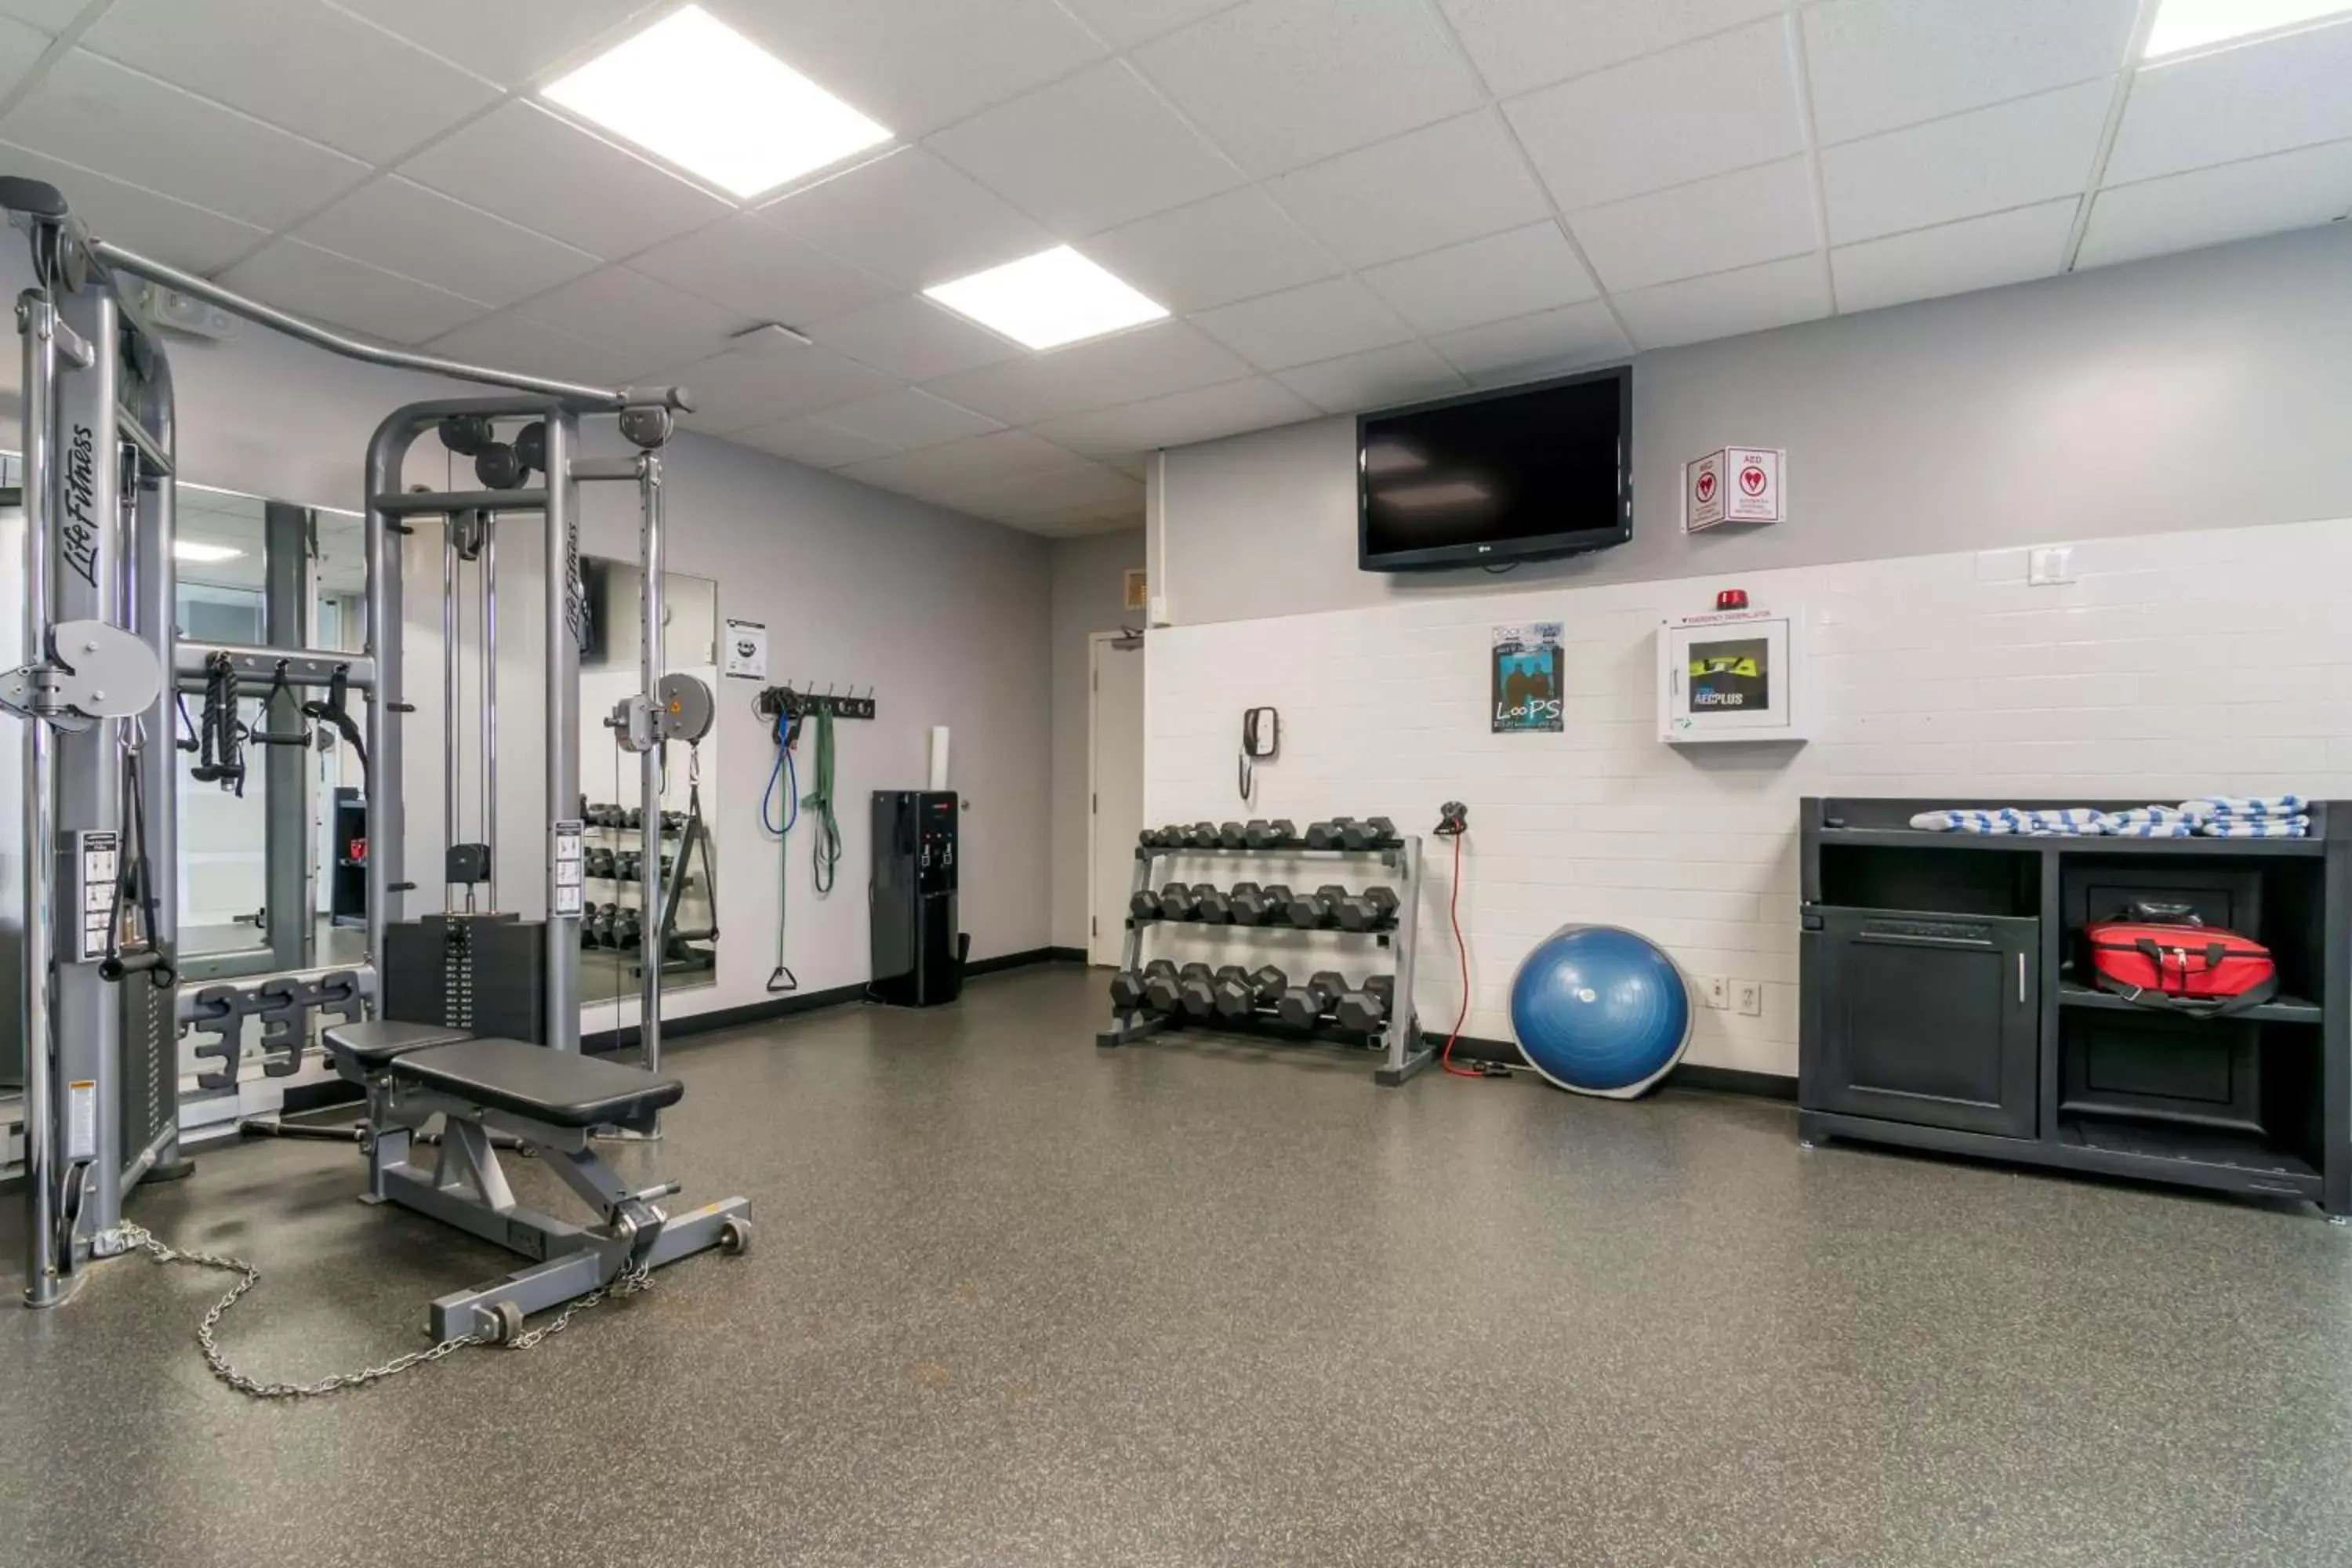 Fitness centre/facilities, Fitness Center/Facilities in Best Western Premier Aberdeen Kamloops